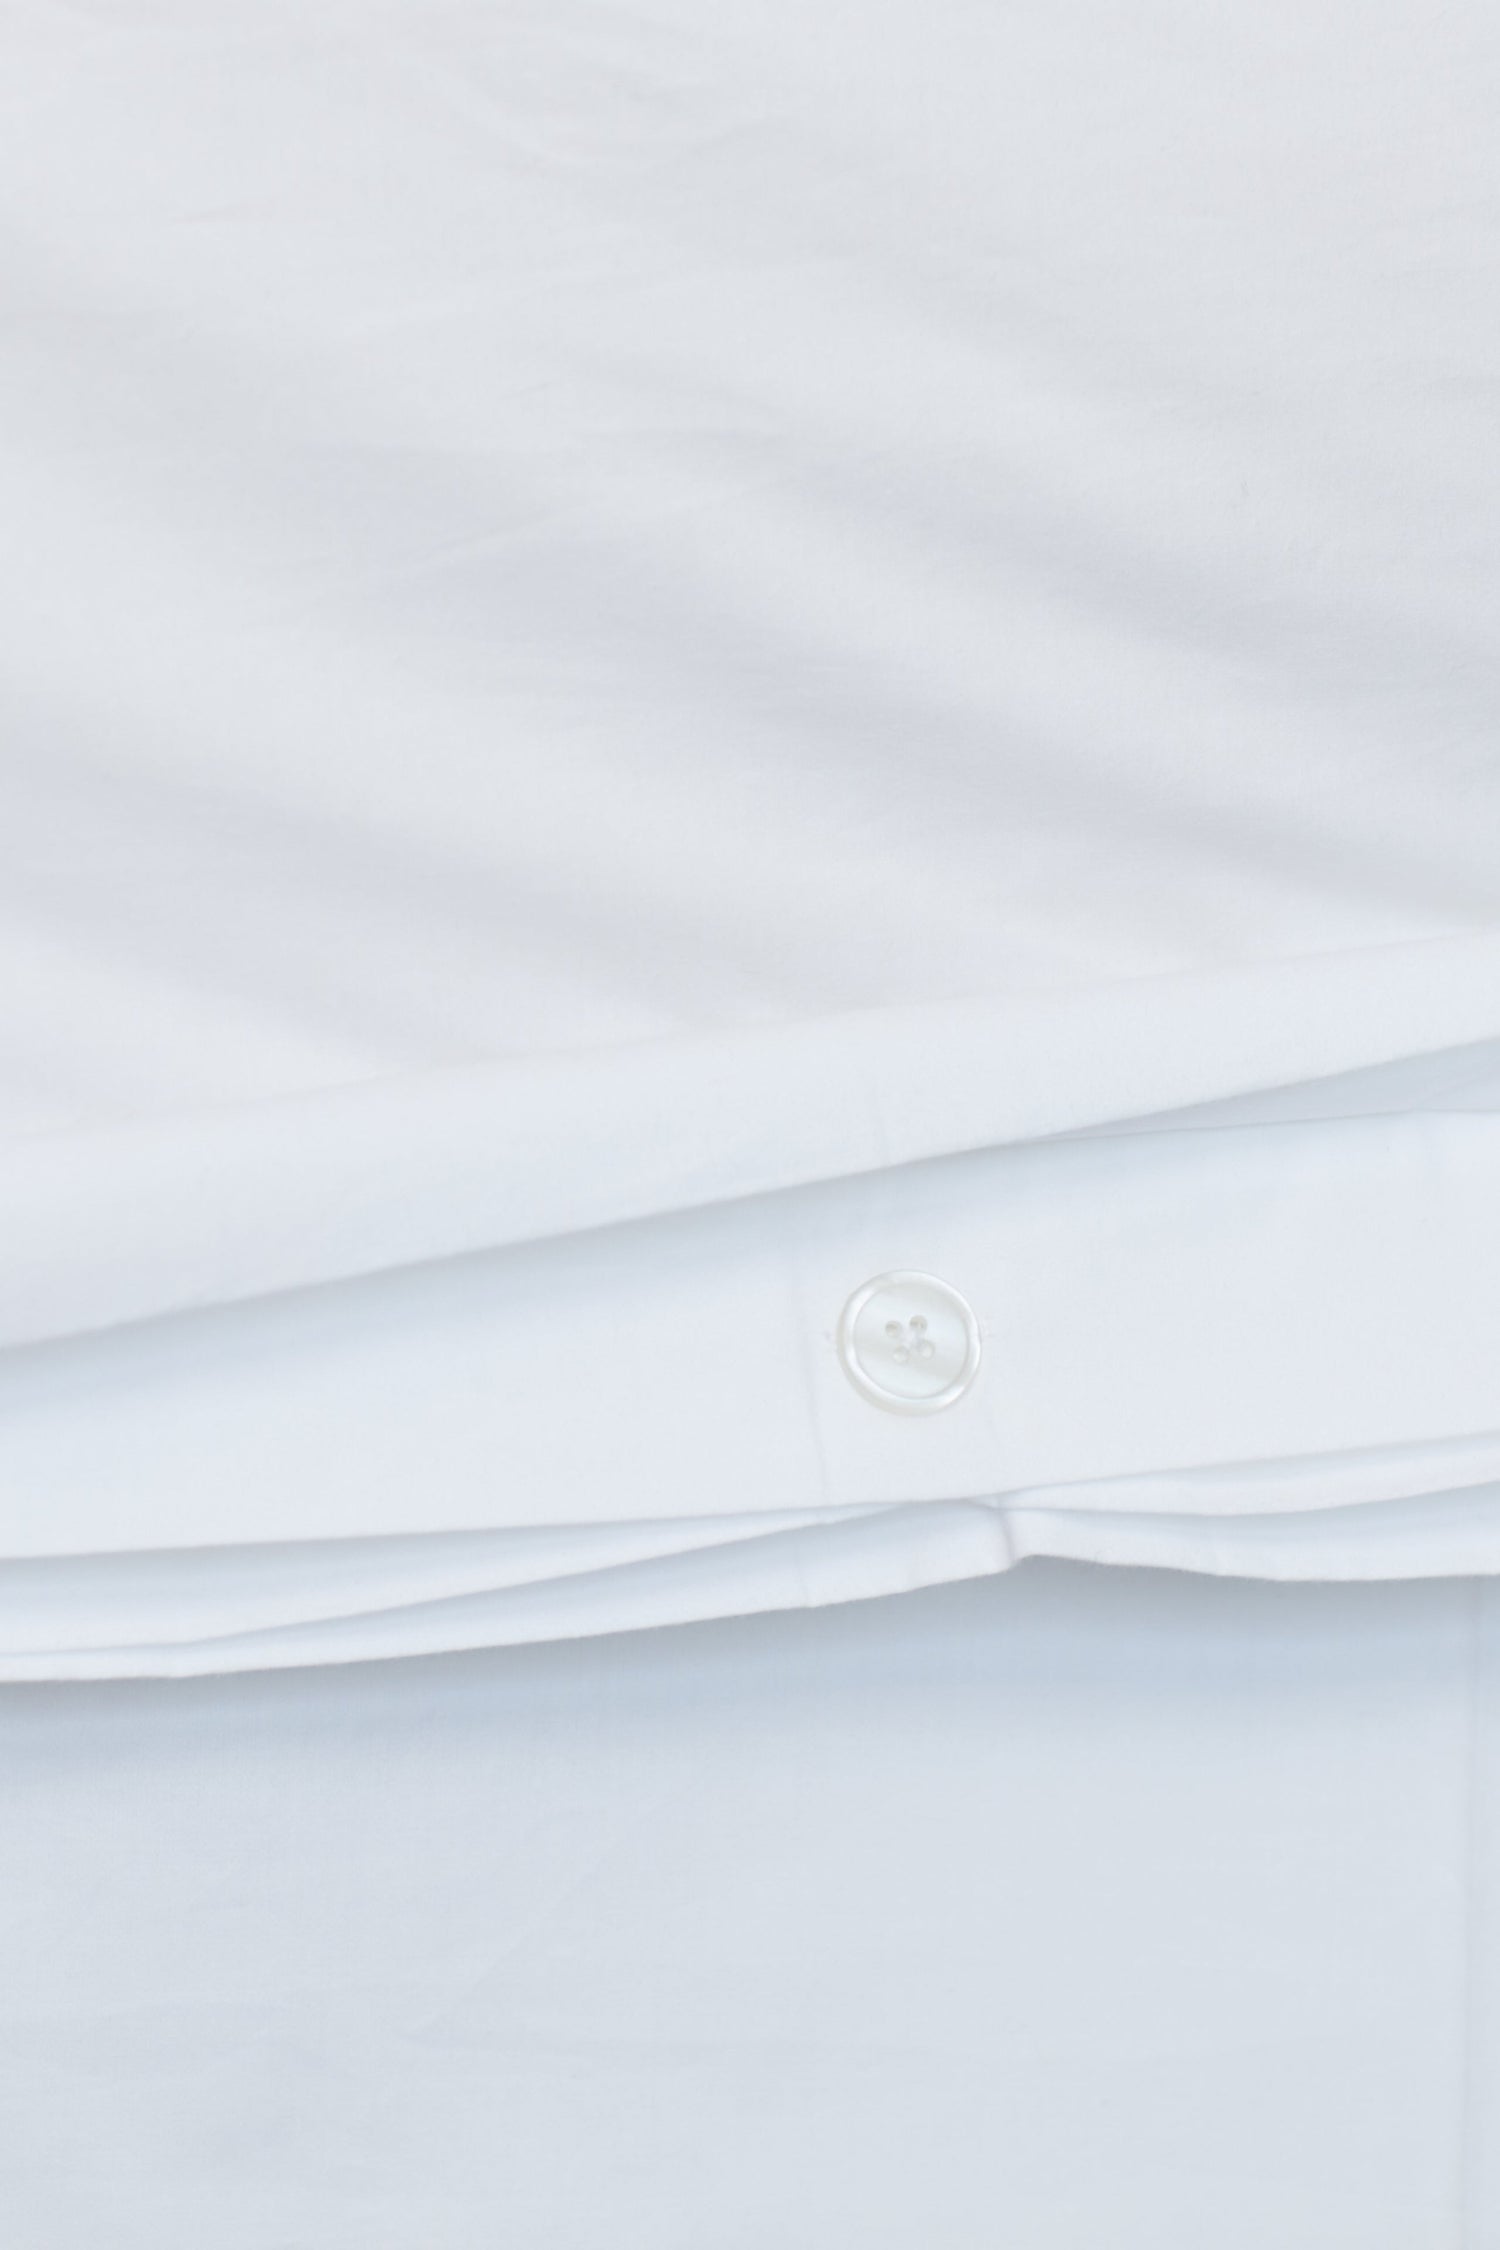 Pewter Banded Duvet Cover + White Sheet Bundle | 100% Organic Certified Cotton